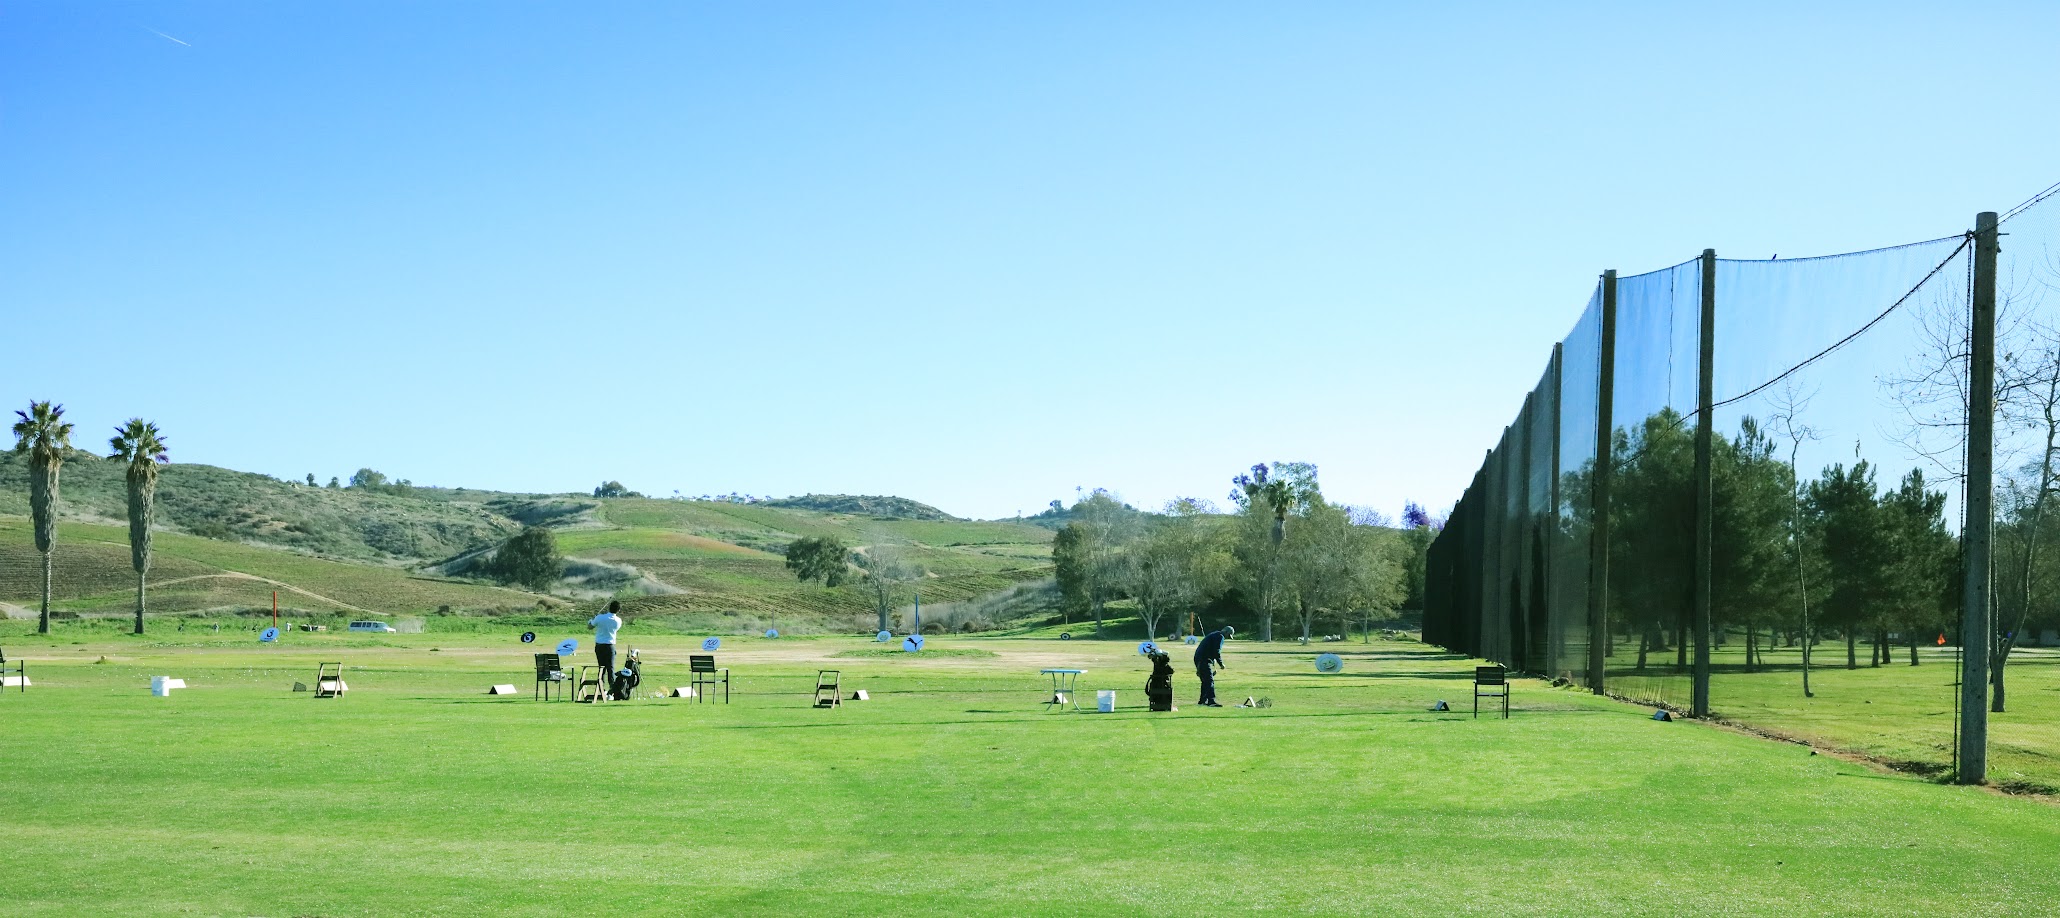 Rancho Carlsbad Golf Course